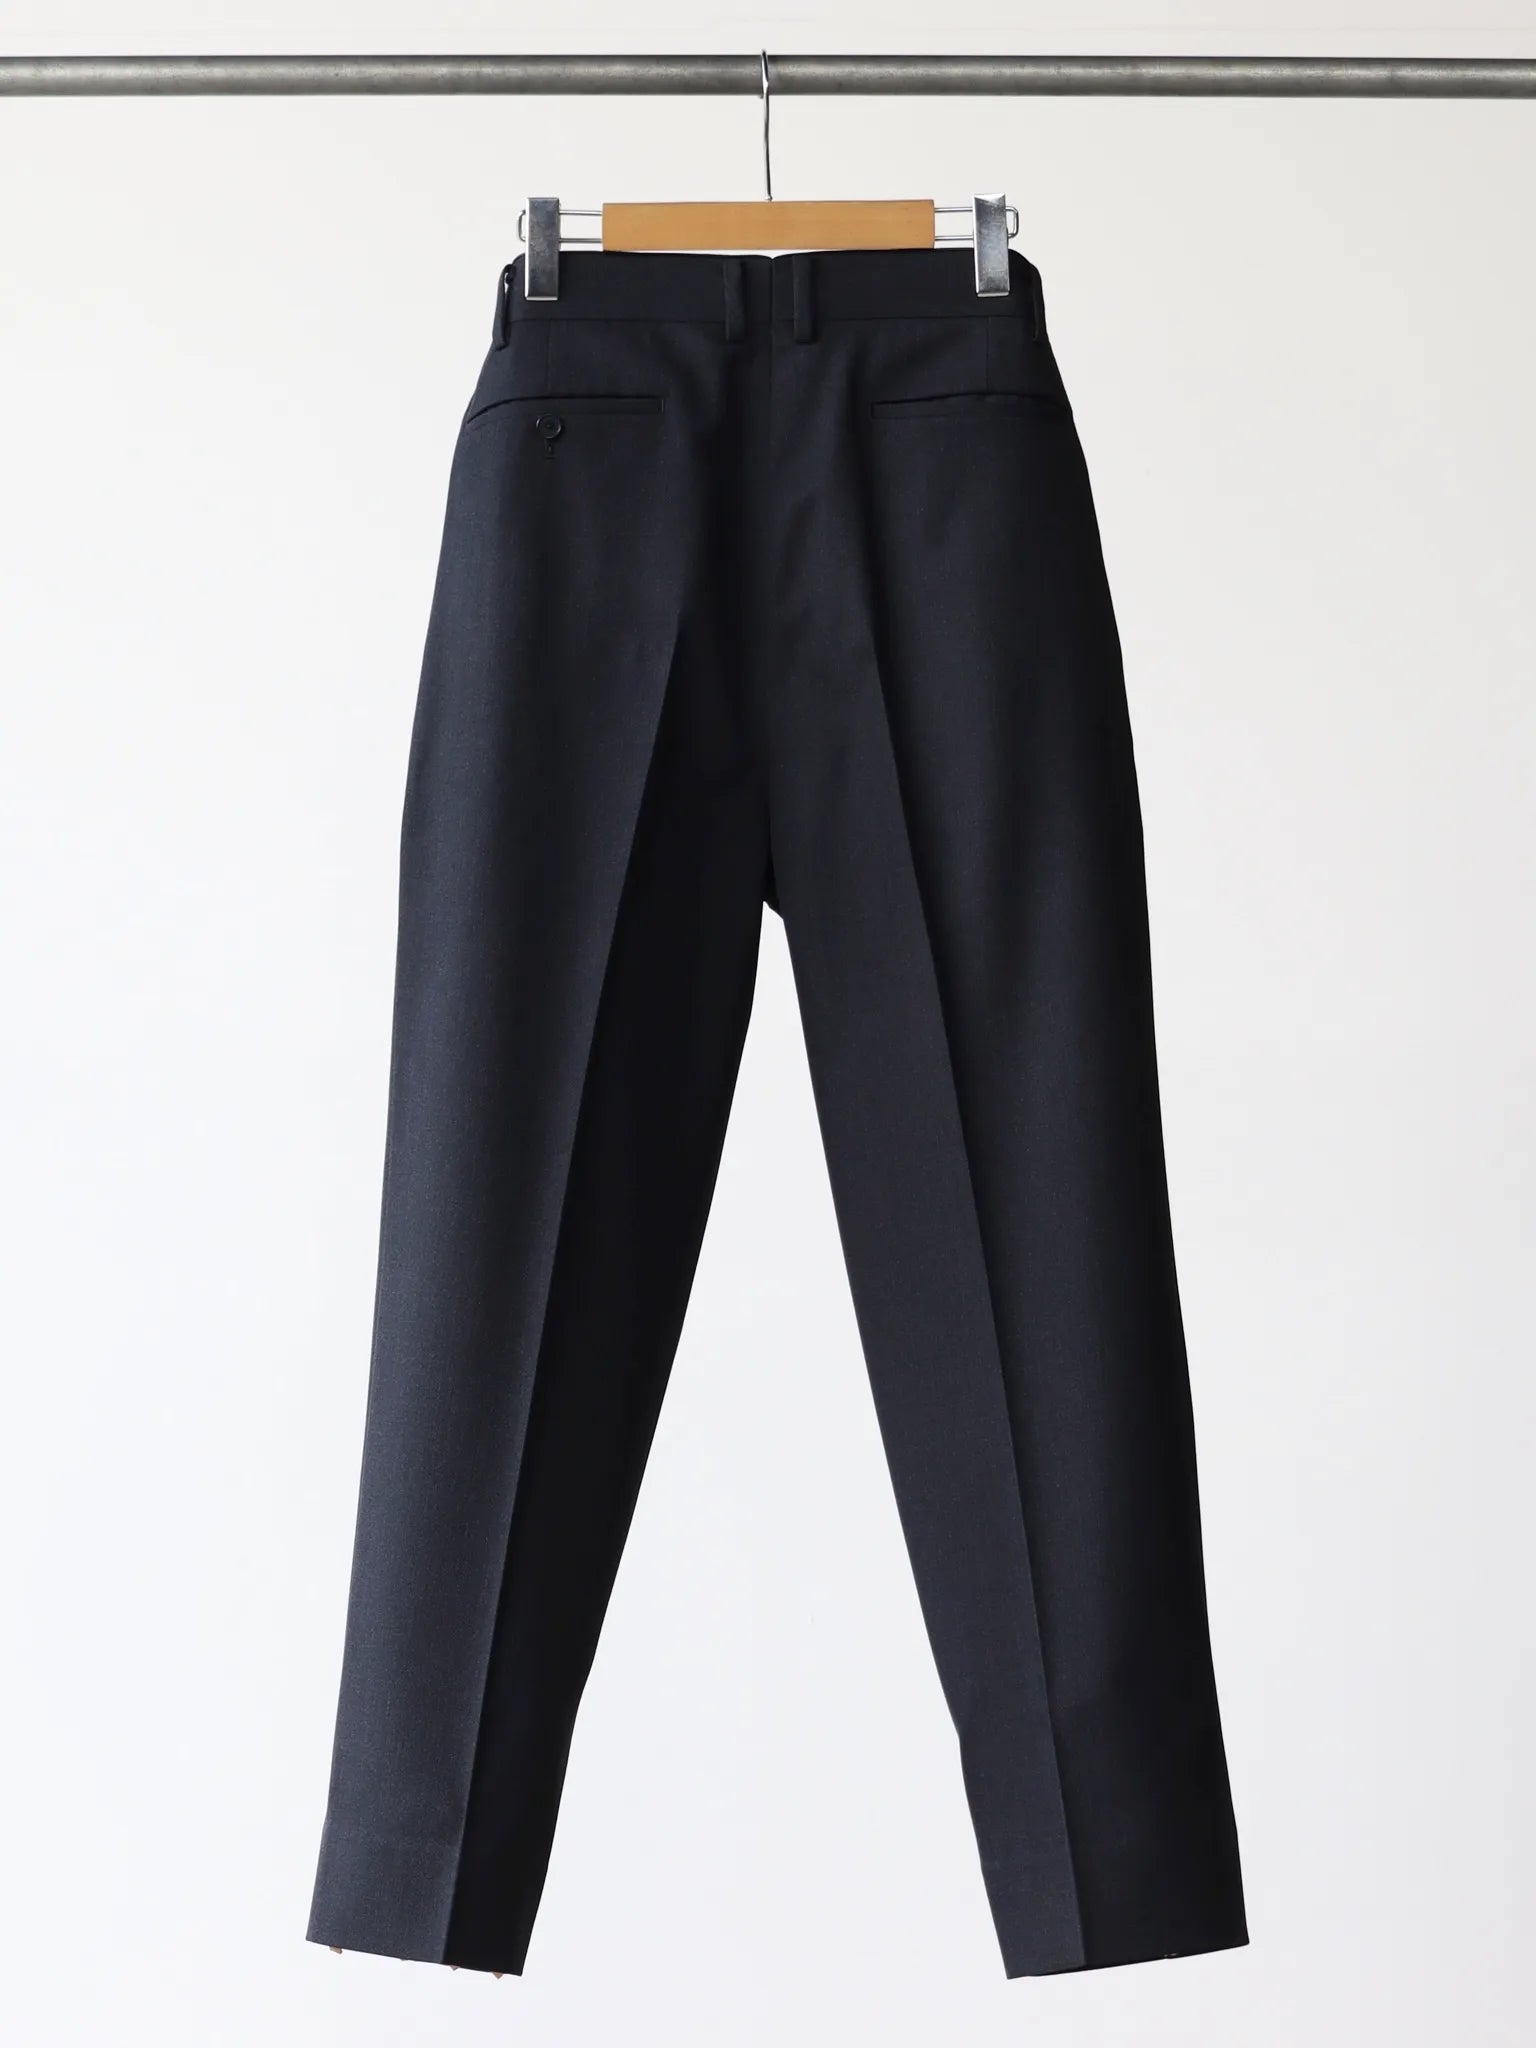 A.PRESSE】Covert Cloth Trousers - electro-tel.com